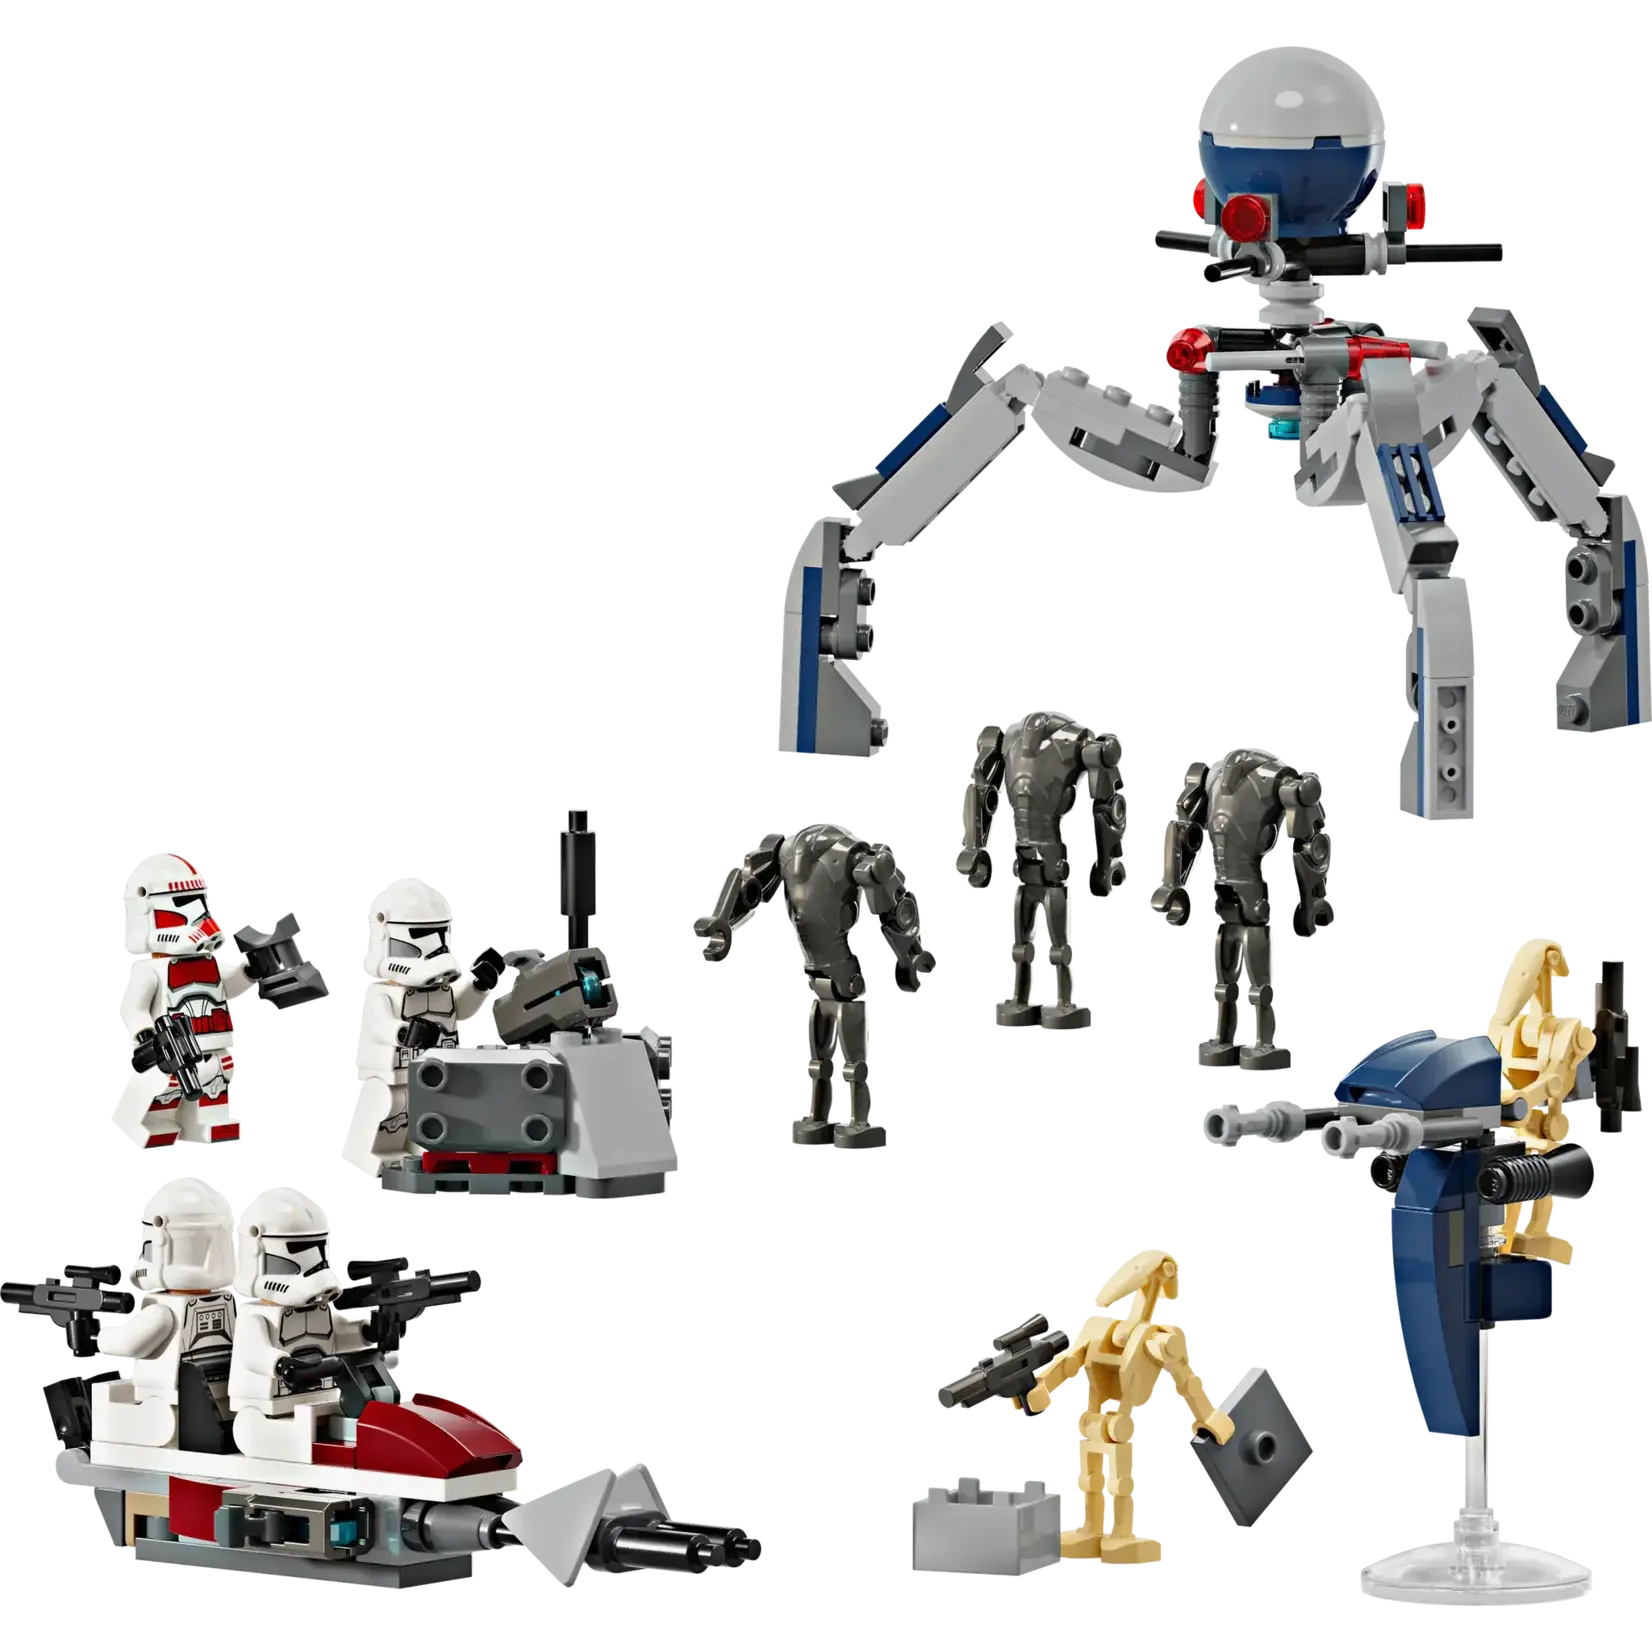 LEGO 75372 LEGO® Star Wars™ Clone Trooper™ & Battle Droid™ Battle Pack